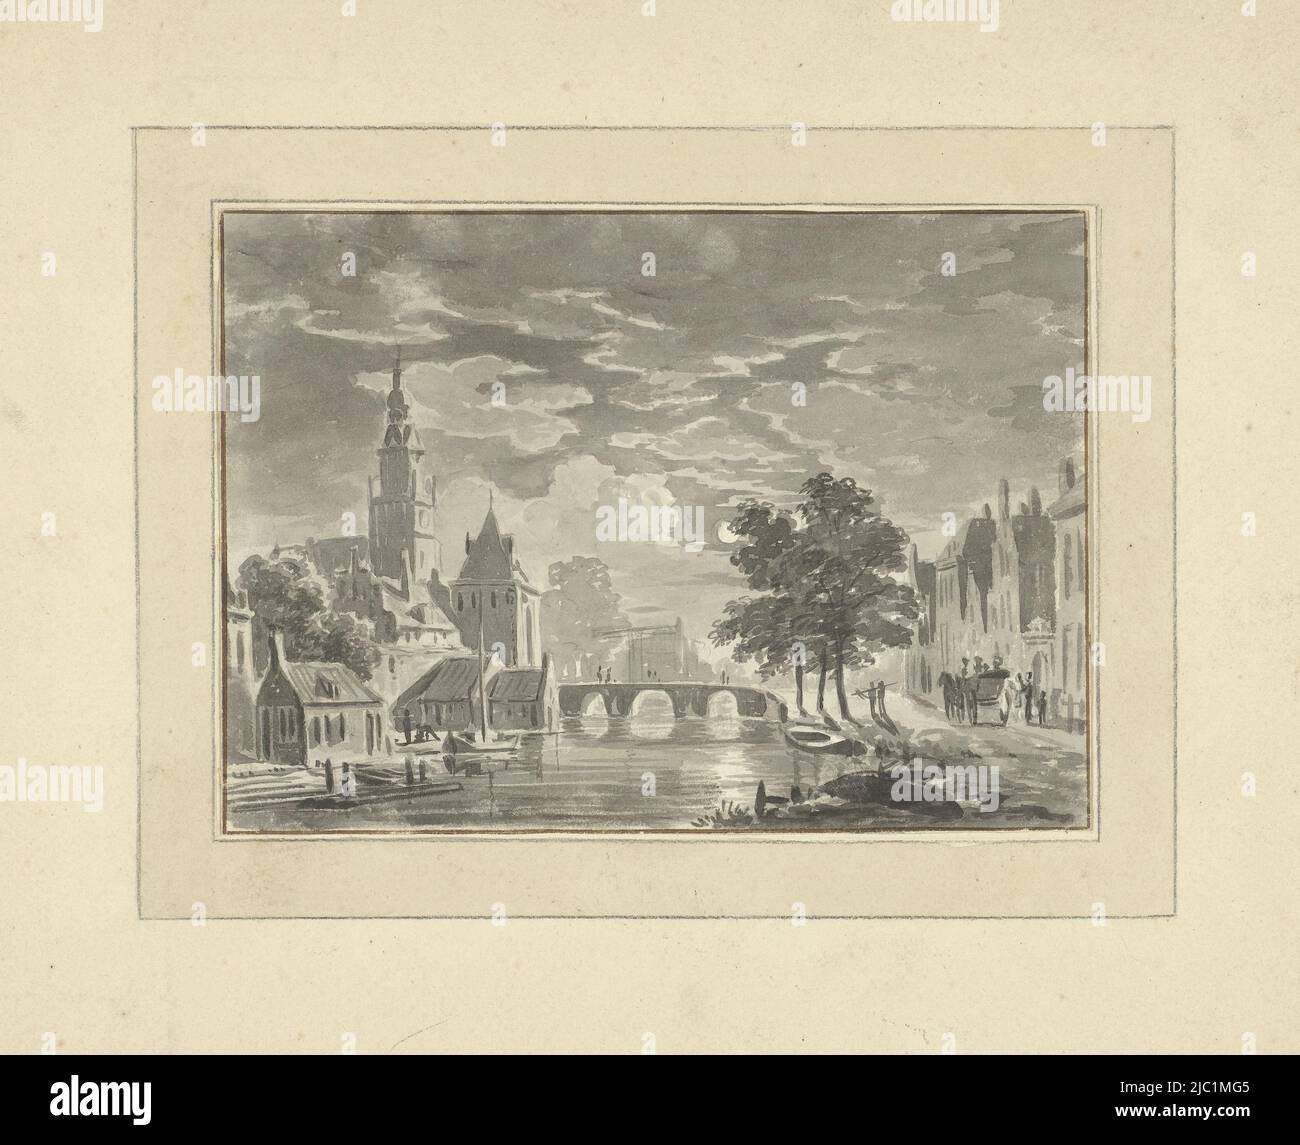 Cityscape by moonlight, draughtsman: Bartholomeus Johannes van Hove, 1800 - 1826, paper, brush, h 145 mm × w 201 mm Stock Photo